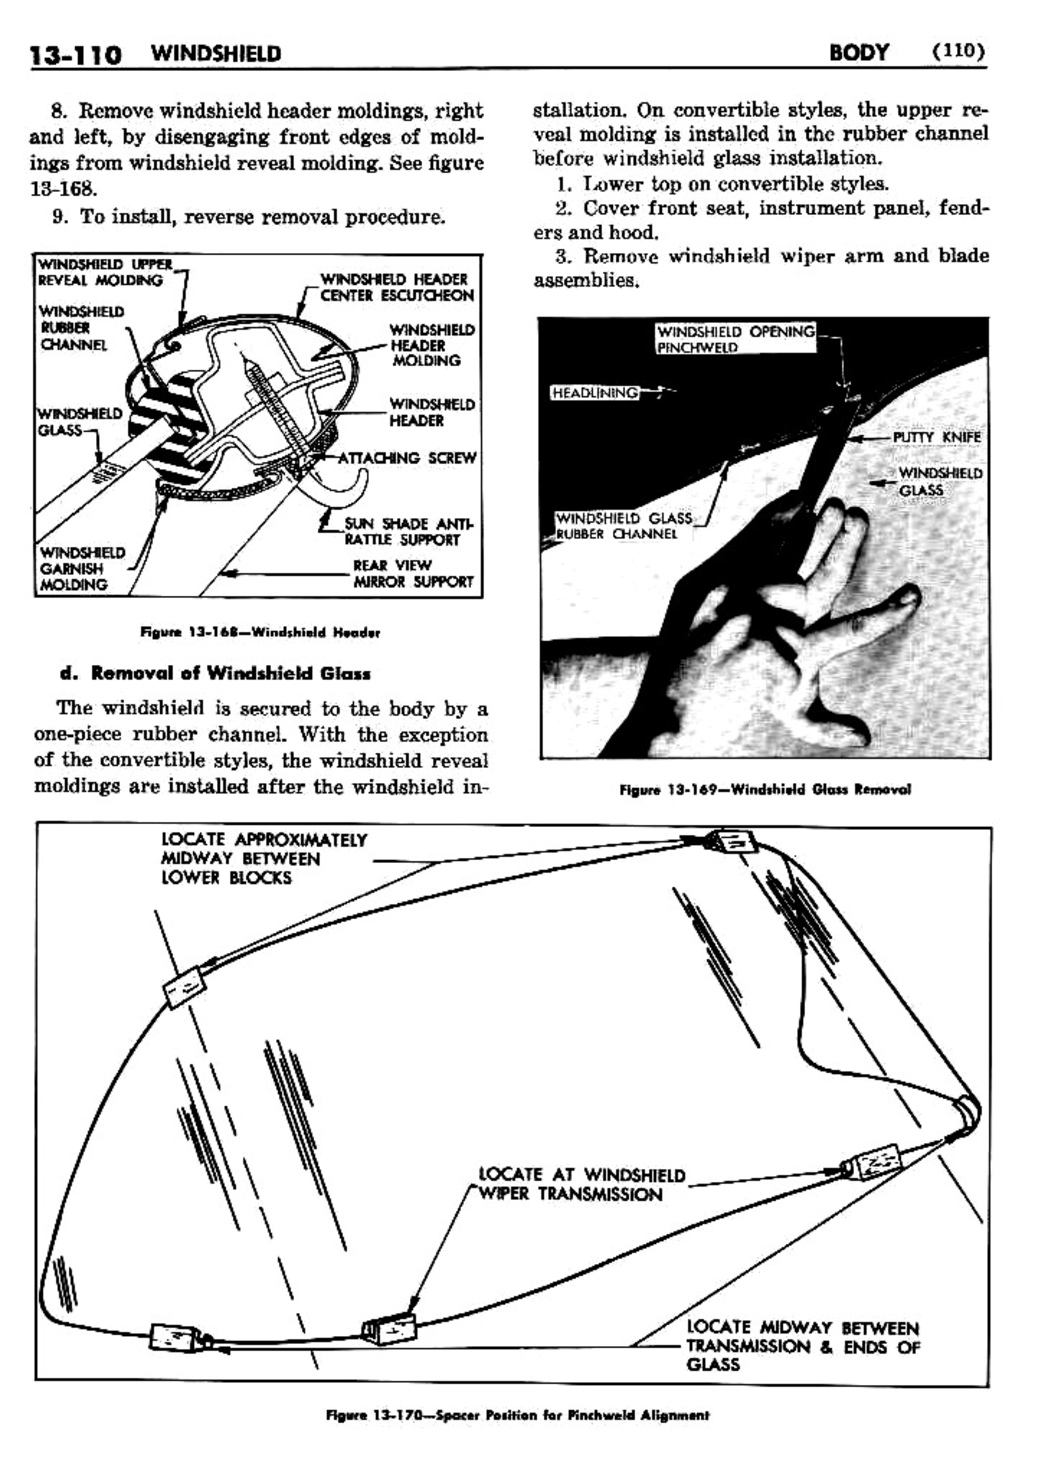 n_1957 Buick Body Service Manual-112-112.jpg